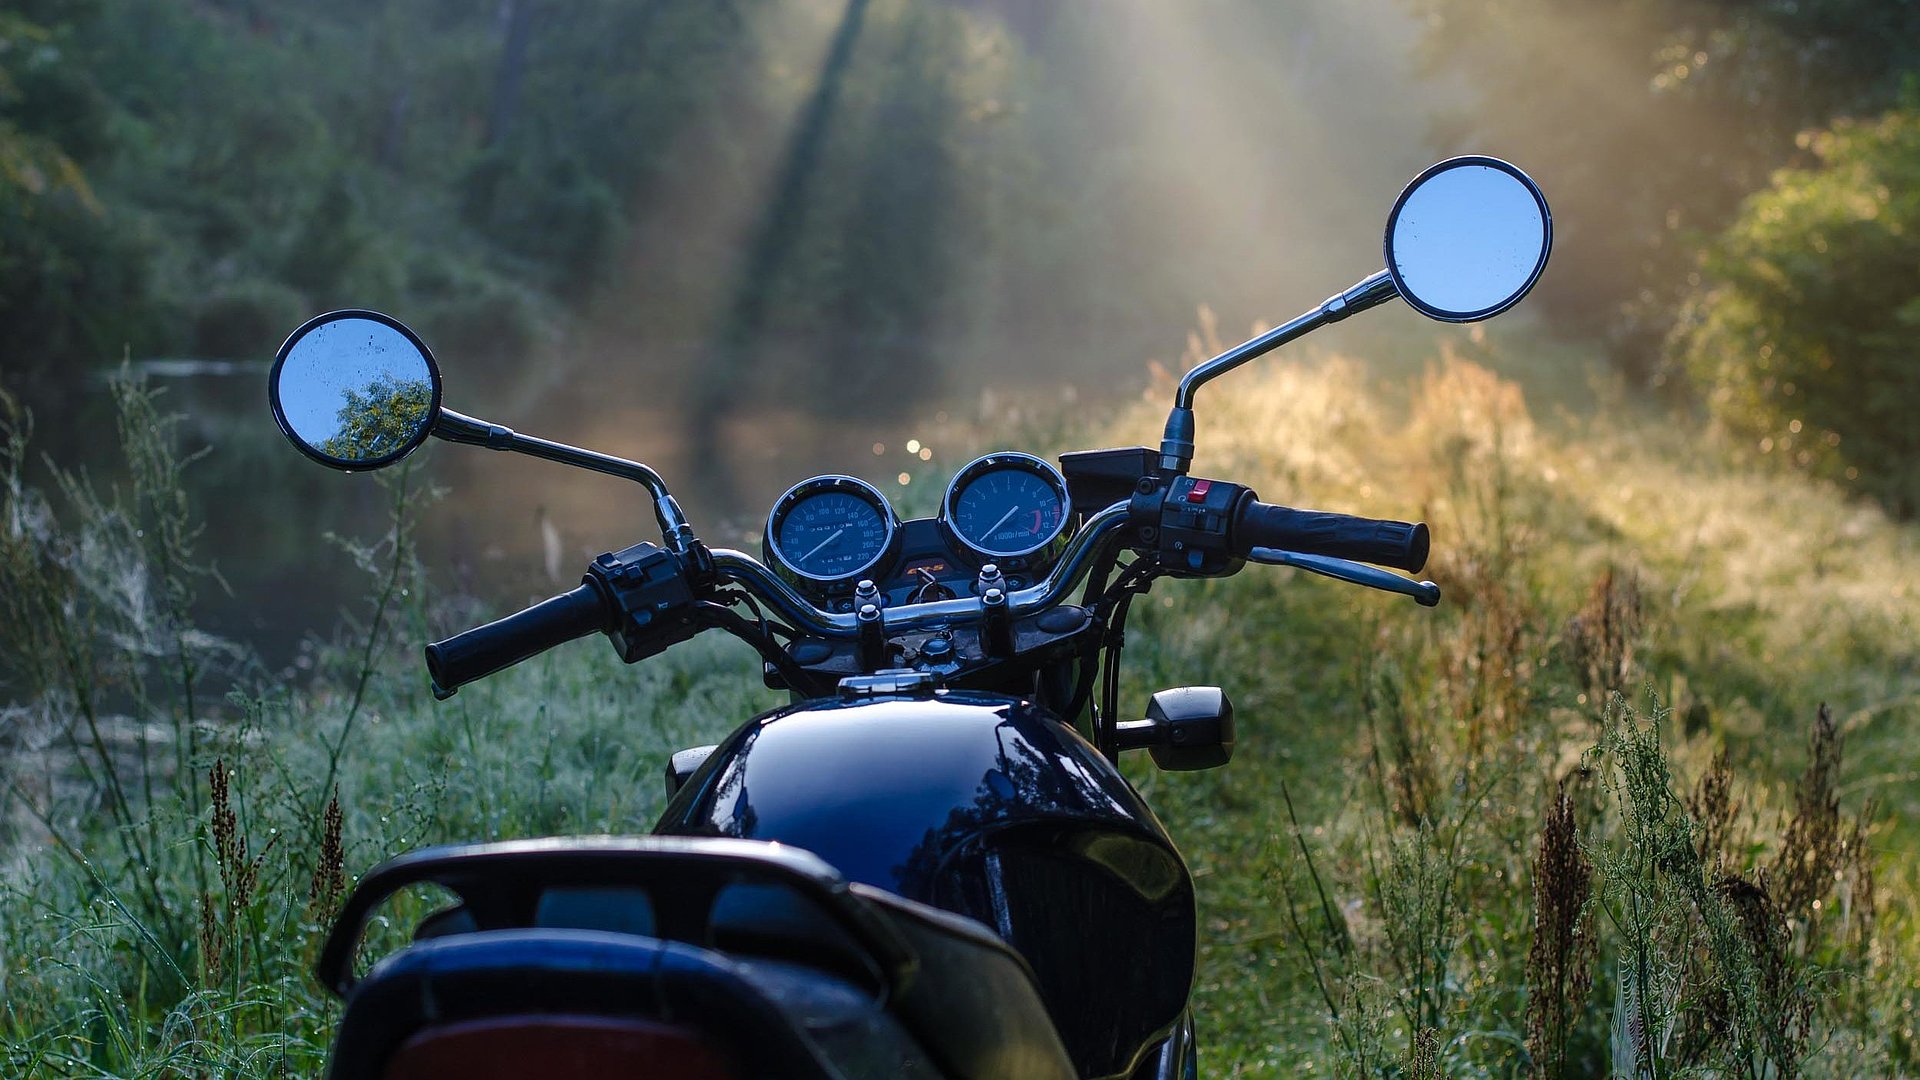 Motorrad-Urlaub im Frankenwald - Motorrad im Wald